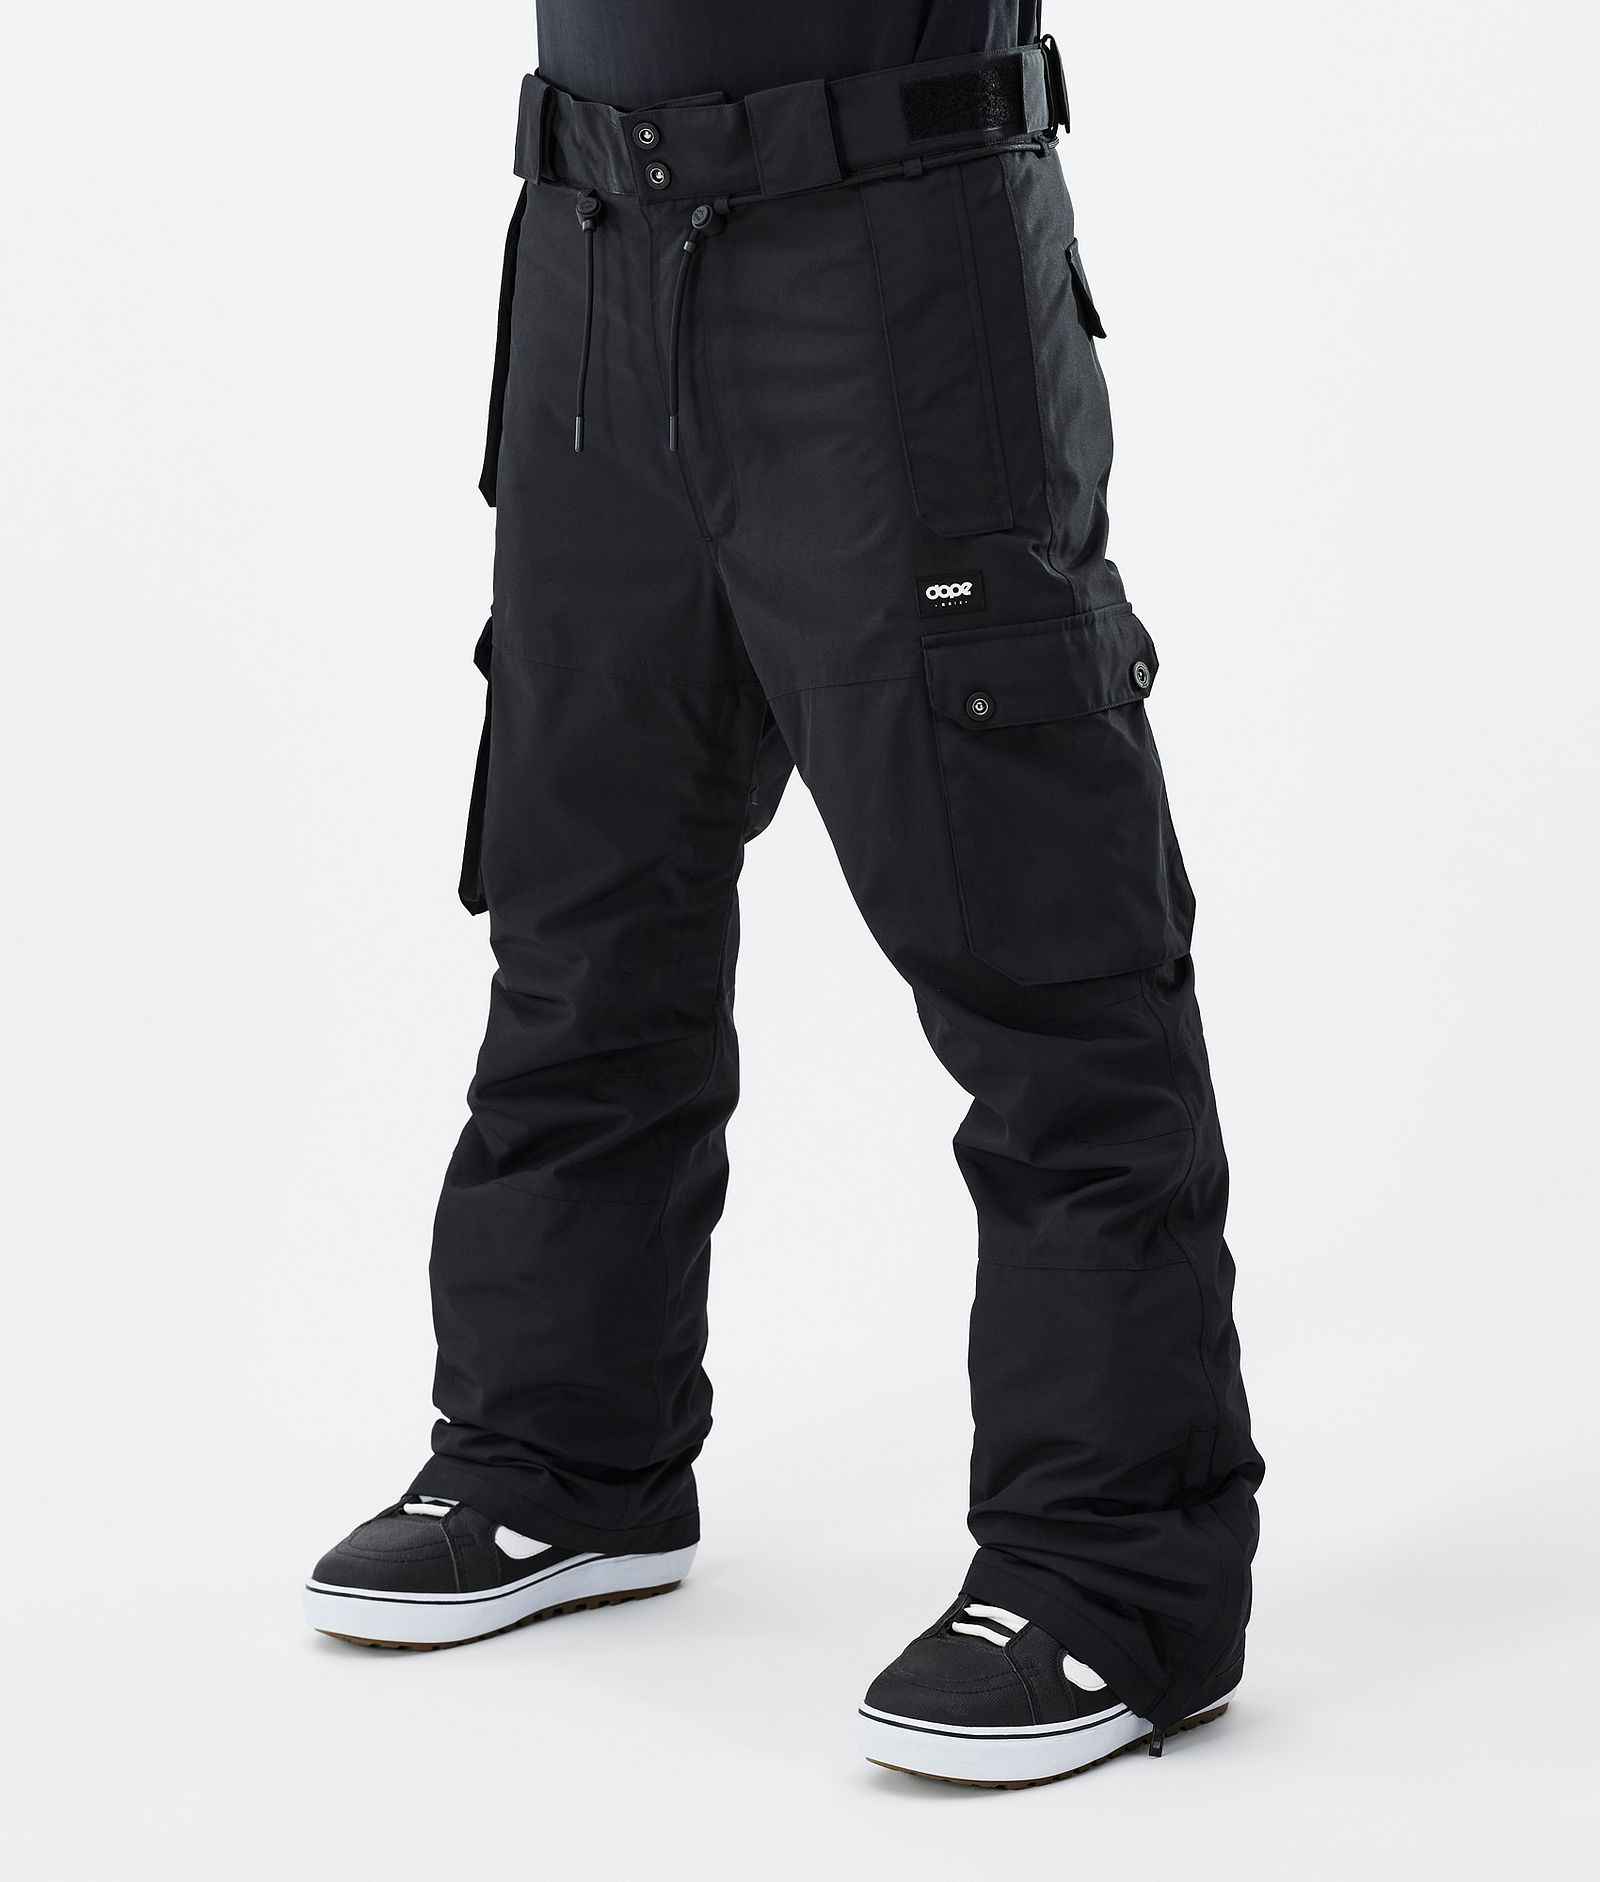 Dope Iconic Pantalones Snowboard Hombre Blackout - Negro